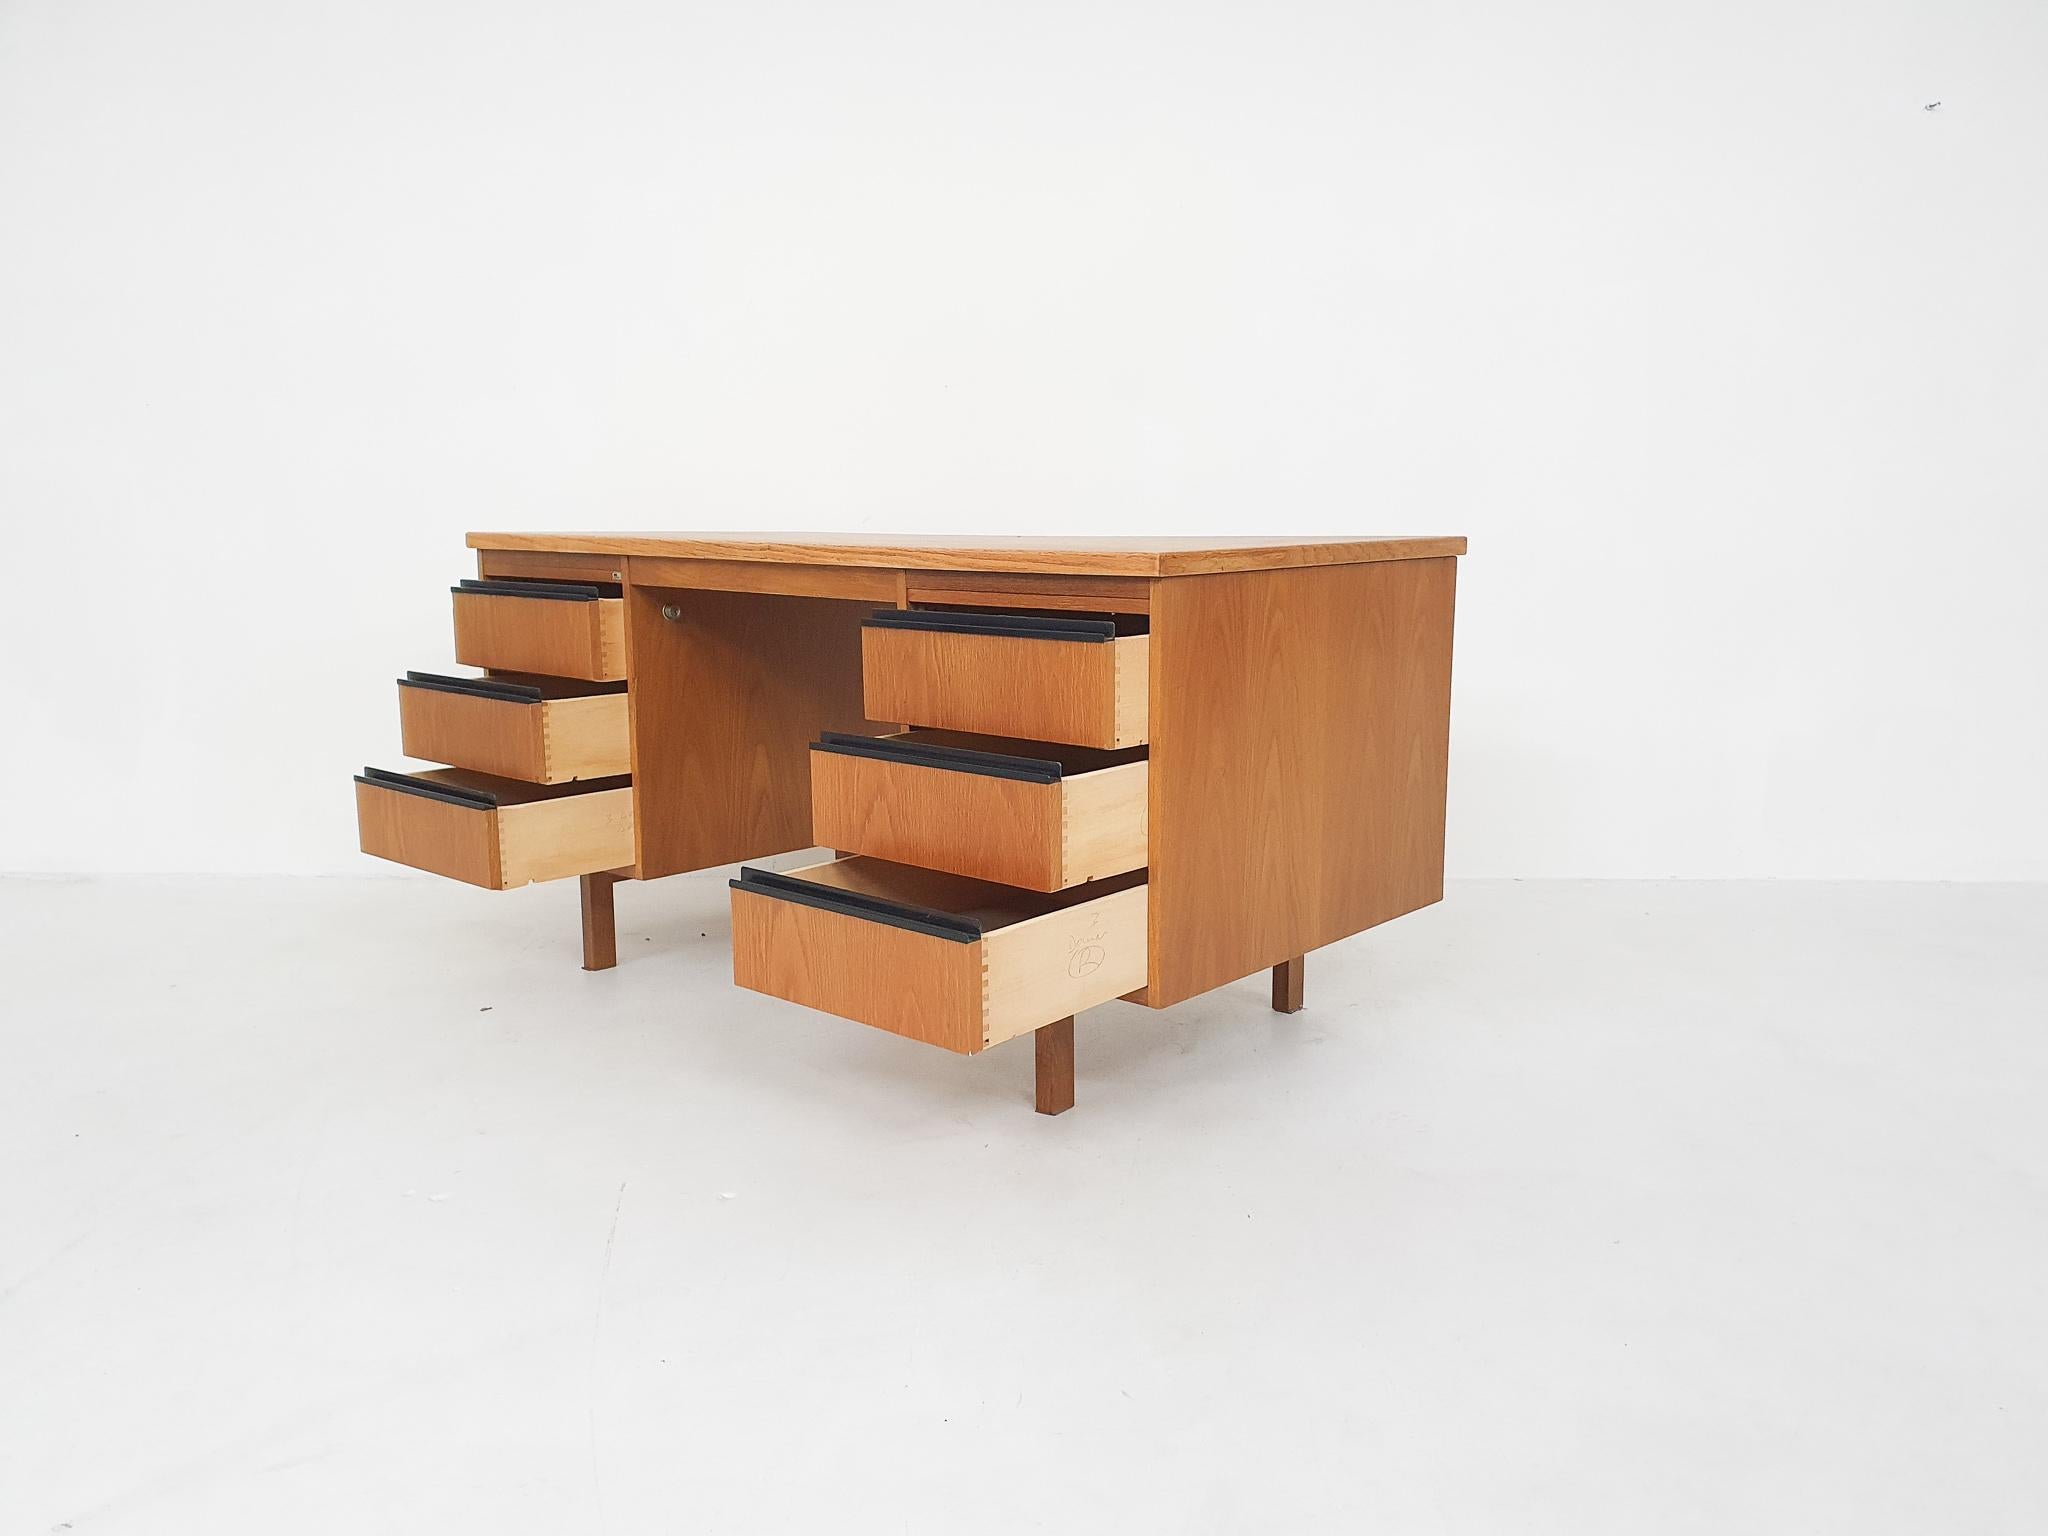 Late 20th Century Dutch Design Oak Desk by Eeka, Attrb Coen de Vries, 1970's